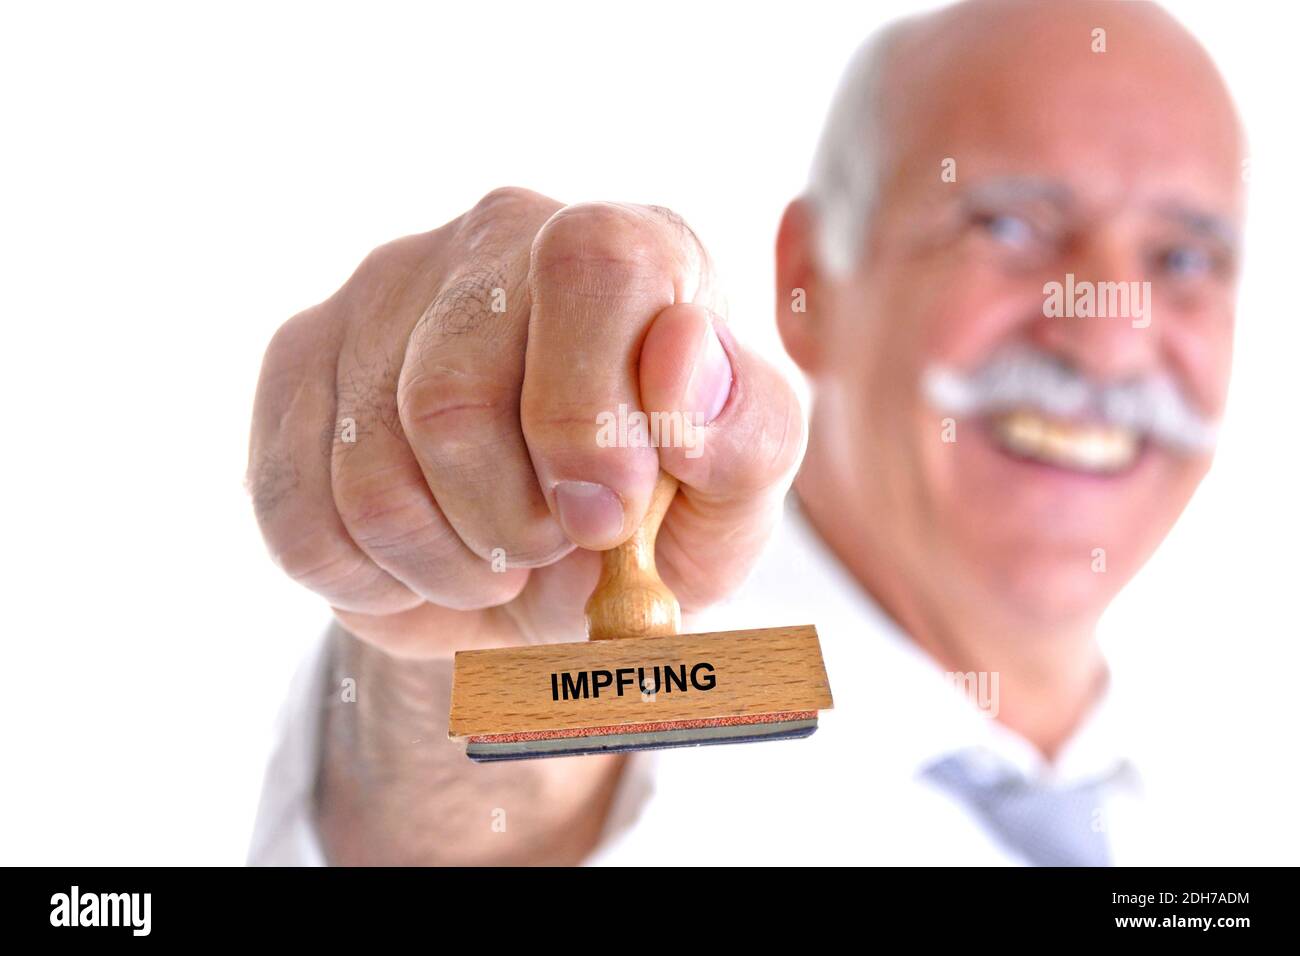 65, 70, Jahre, Mann hält Stempel in der Hand, Aufschrift: Impfung, Schutzimpfung, Grippe-Imfung, Banque D'Images